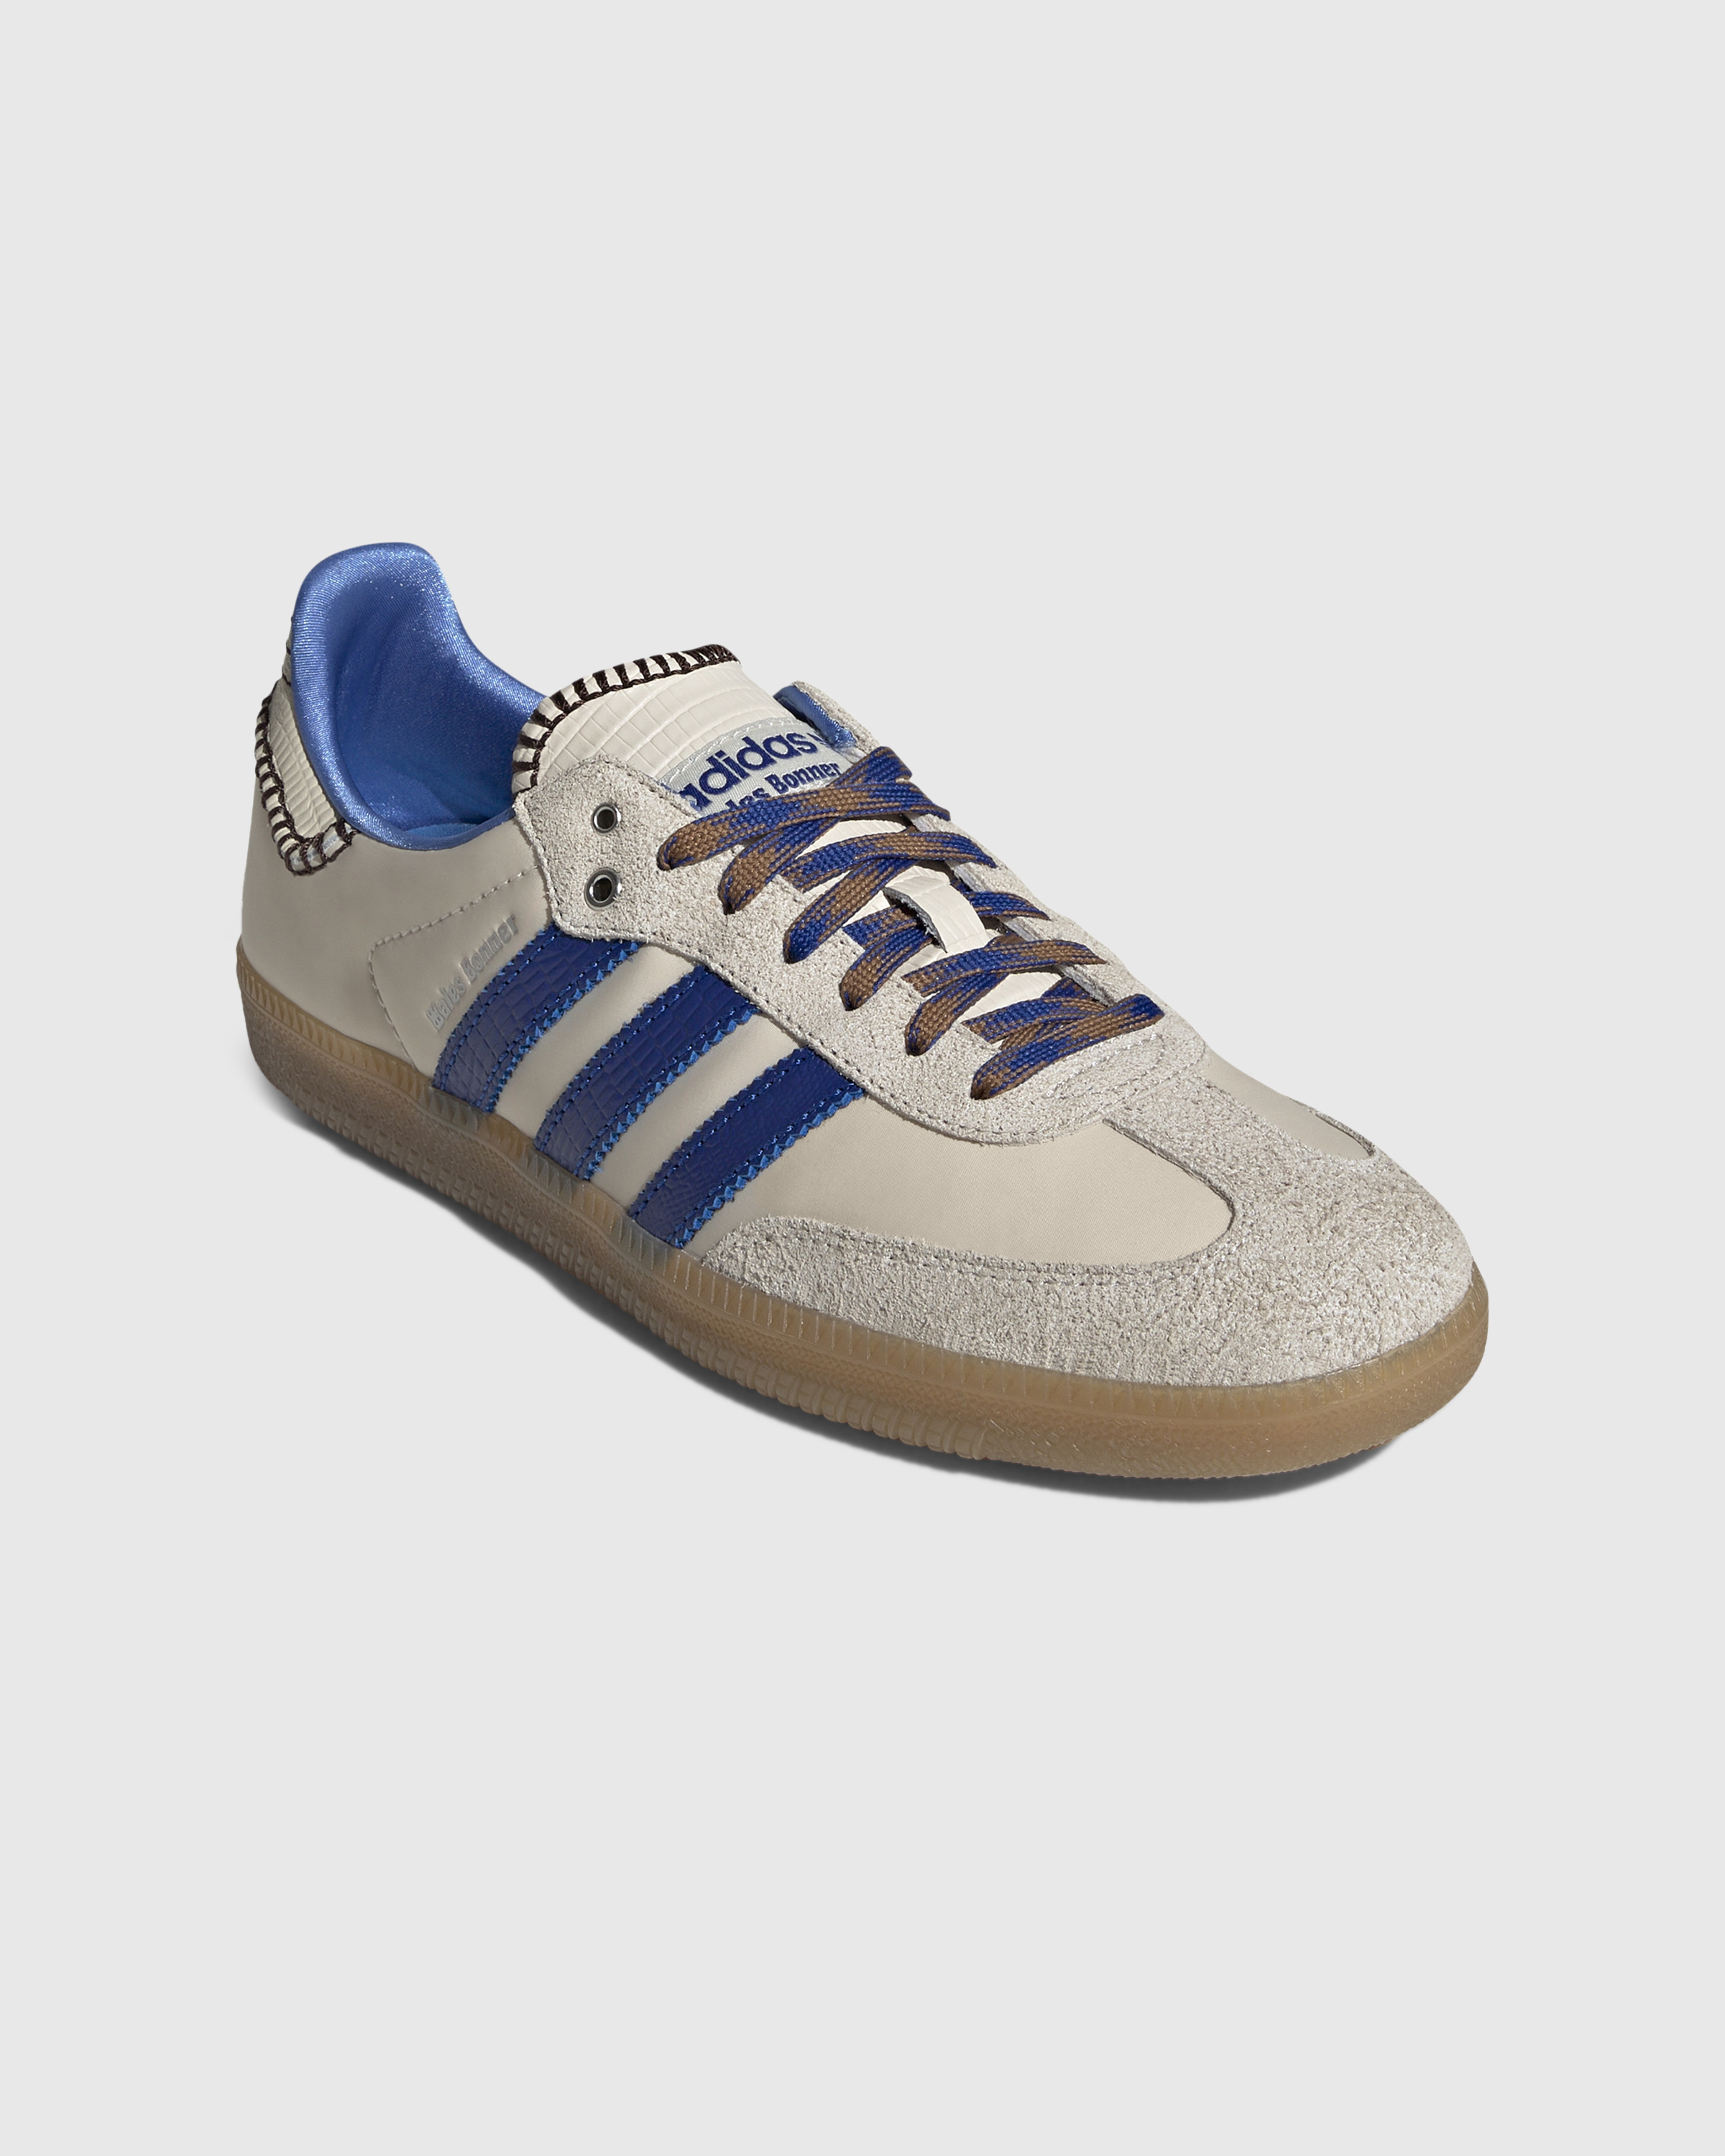 Adidas x Wales Bonner – Samba Cream/Blue - Low Top Sneakers - Beige - Image 3